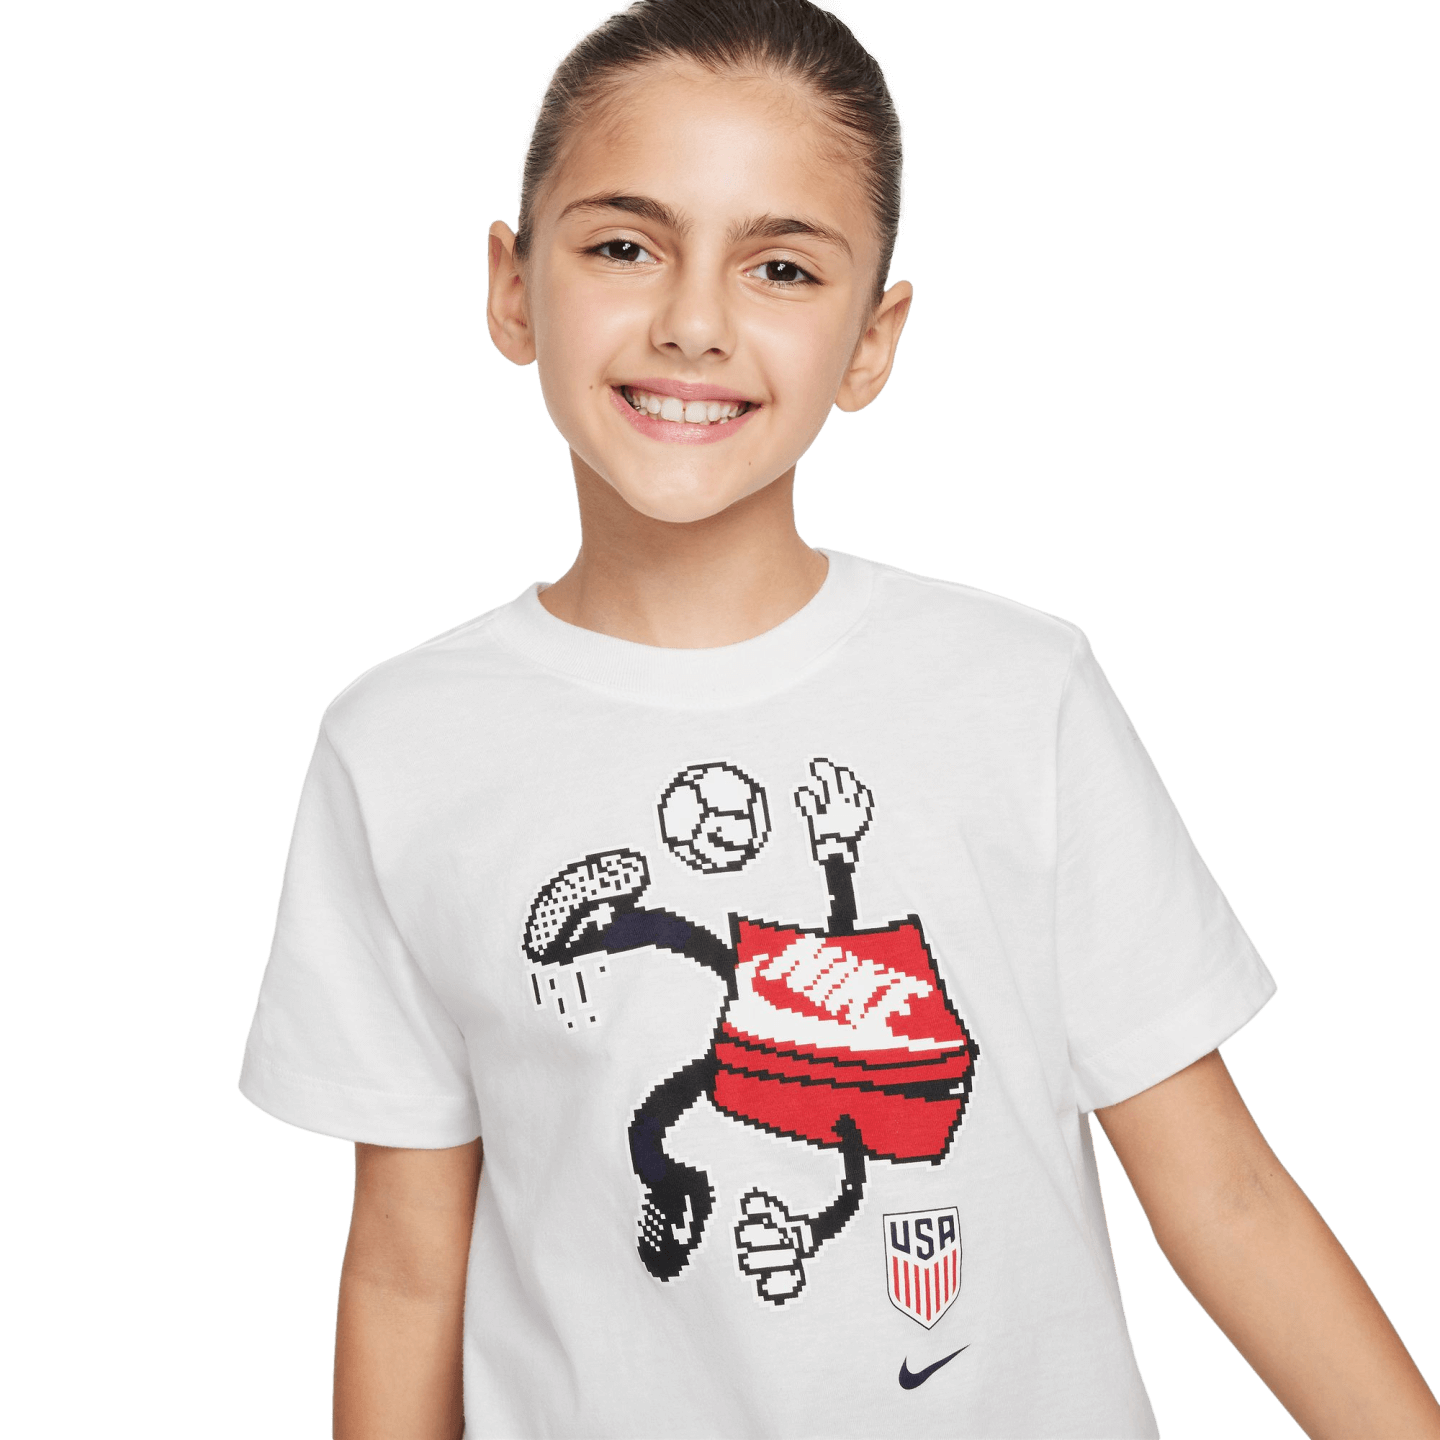 Camiseta juvenil con personaje de Nike USA Shoebox